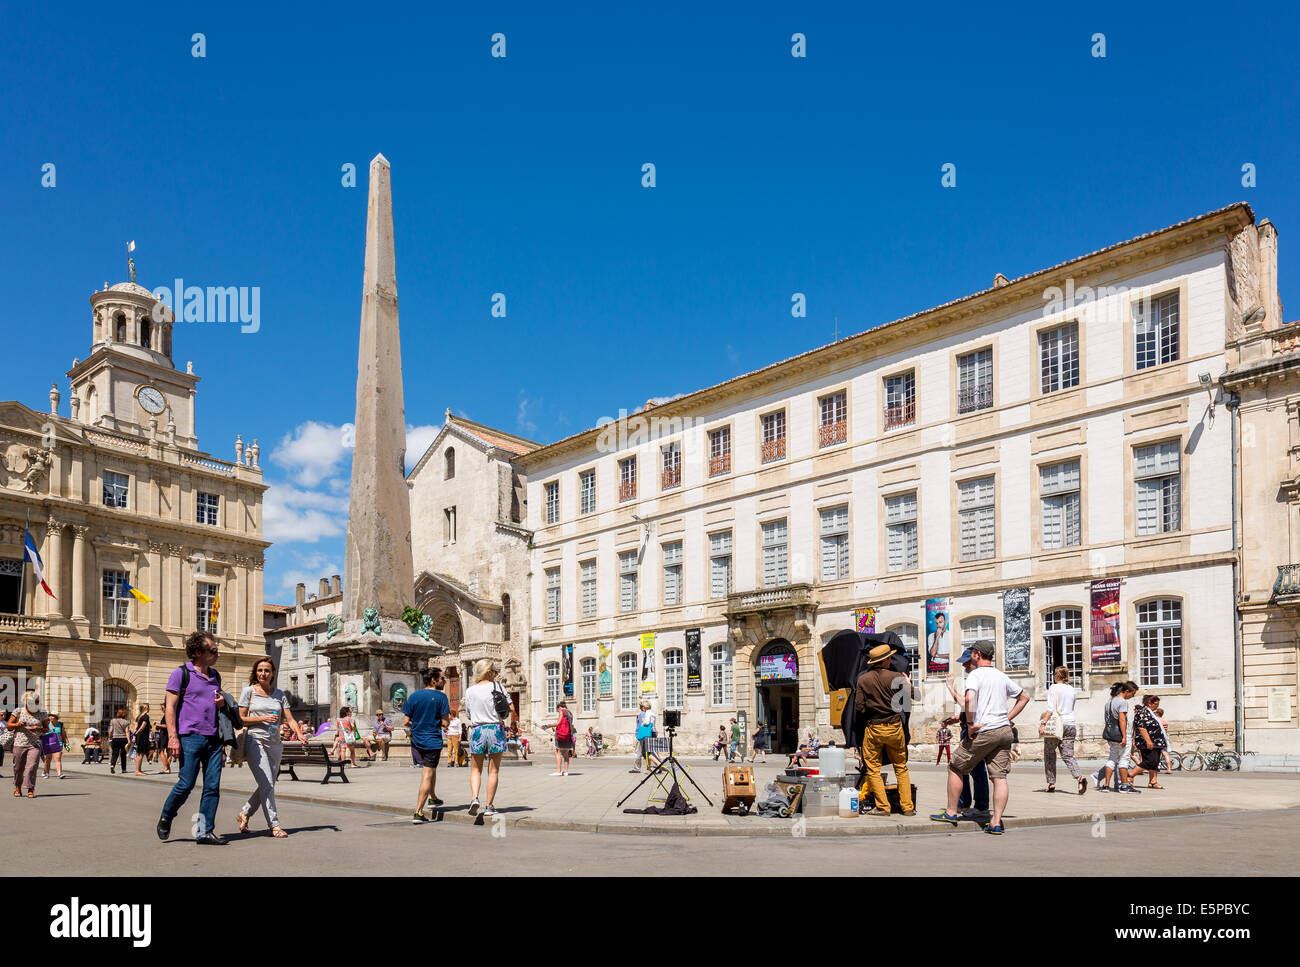 La piazza principale del centro storico di Arles, Place de la Republique, Arles, Bouches-du-Rhone, Provence-Alpes-Côte d'Azur, in Francia Foto Stock